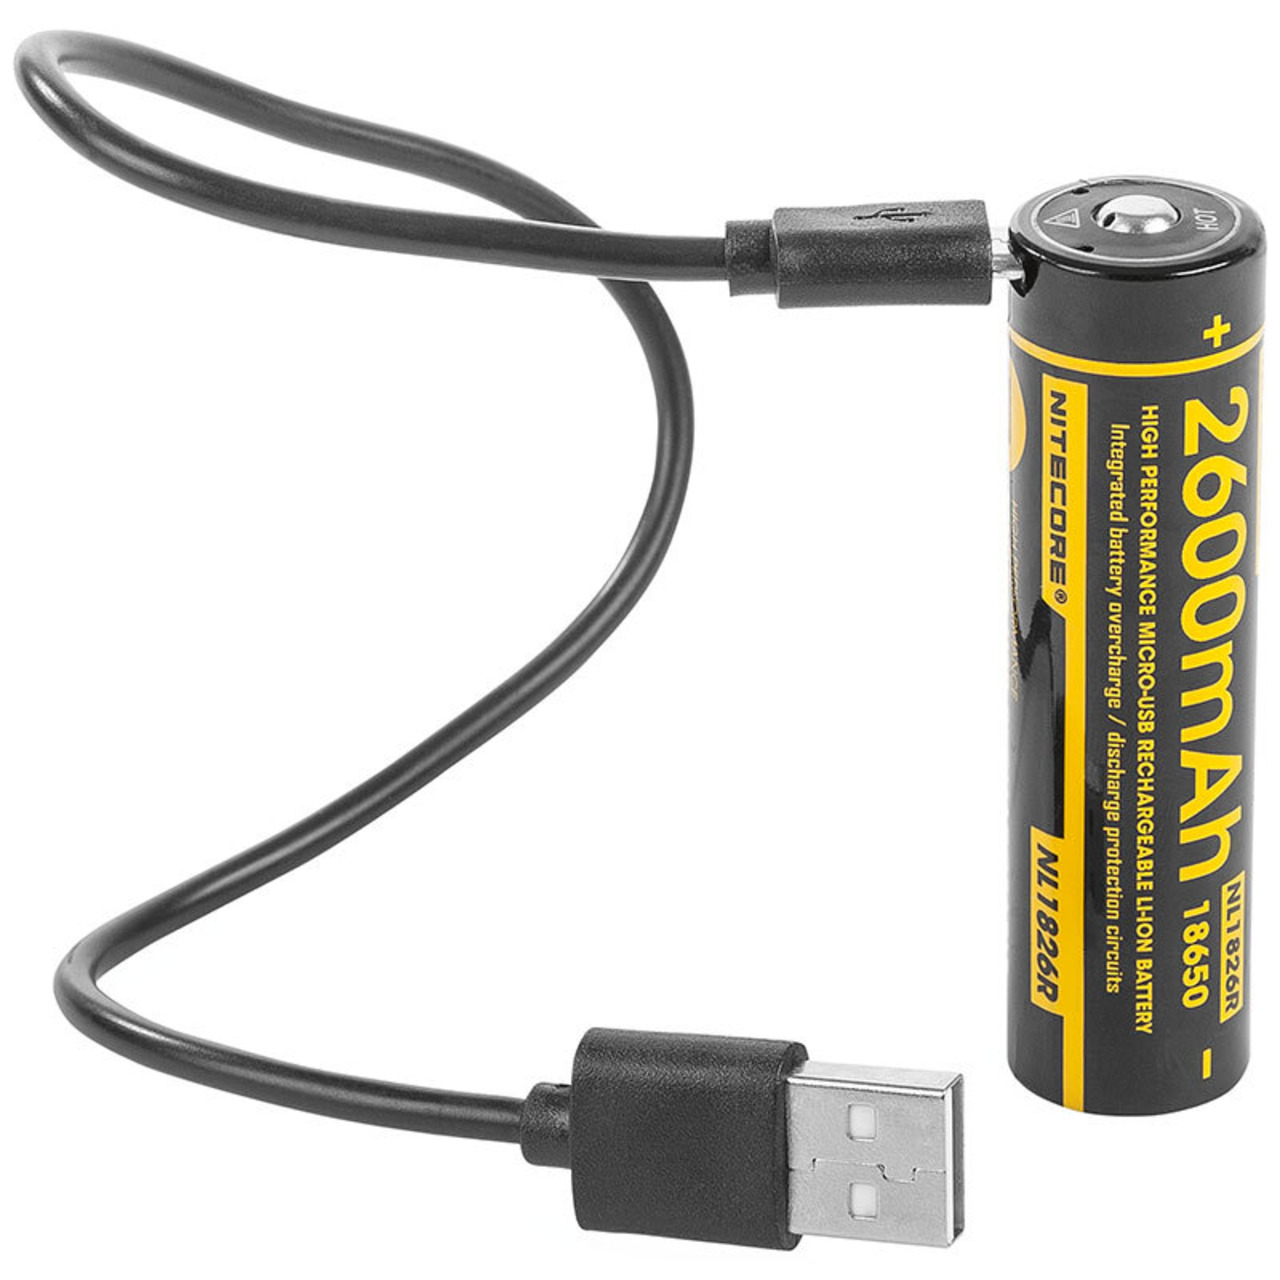 NiteCore Lithium Ion Akku 18650- 2600 mAh mit Micro-USB Ladeanschluss